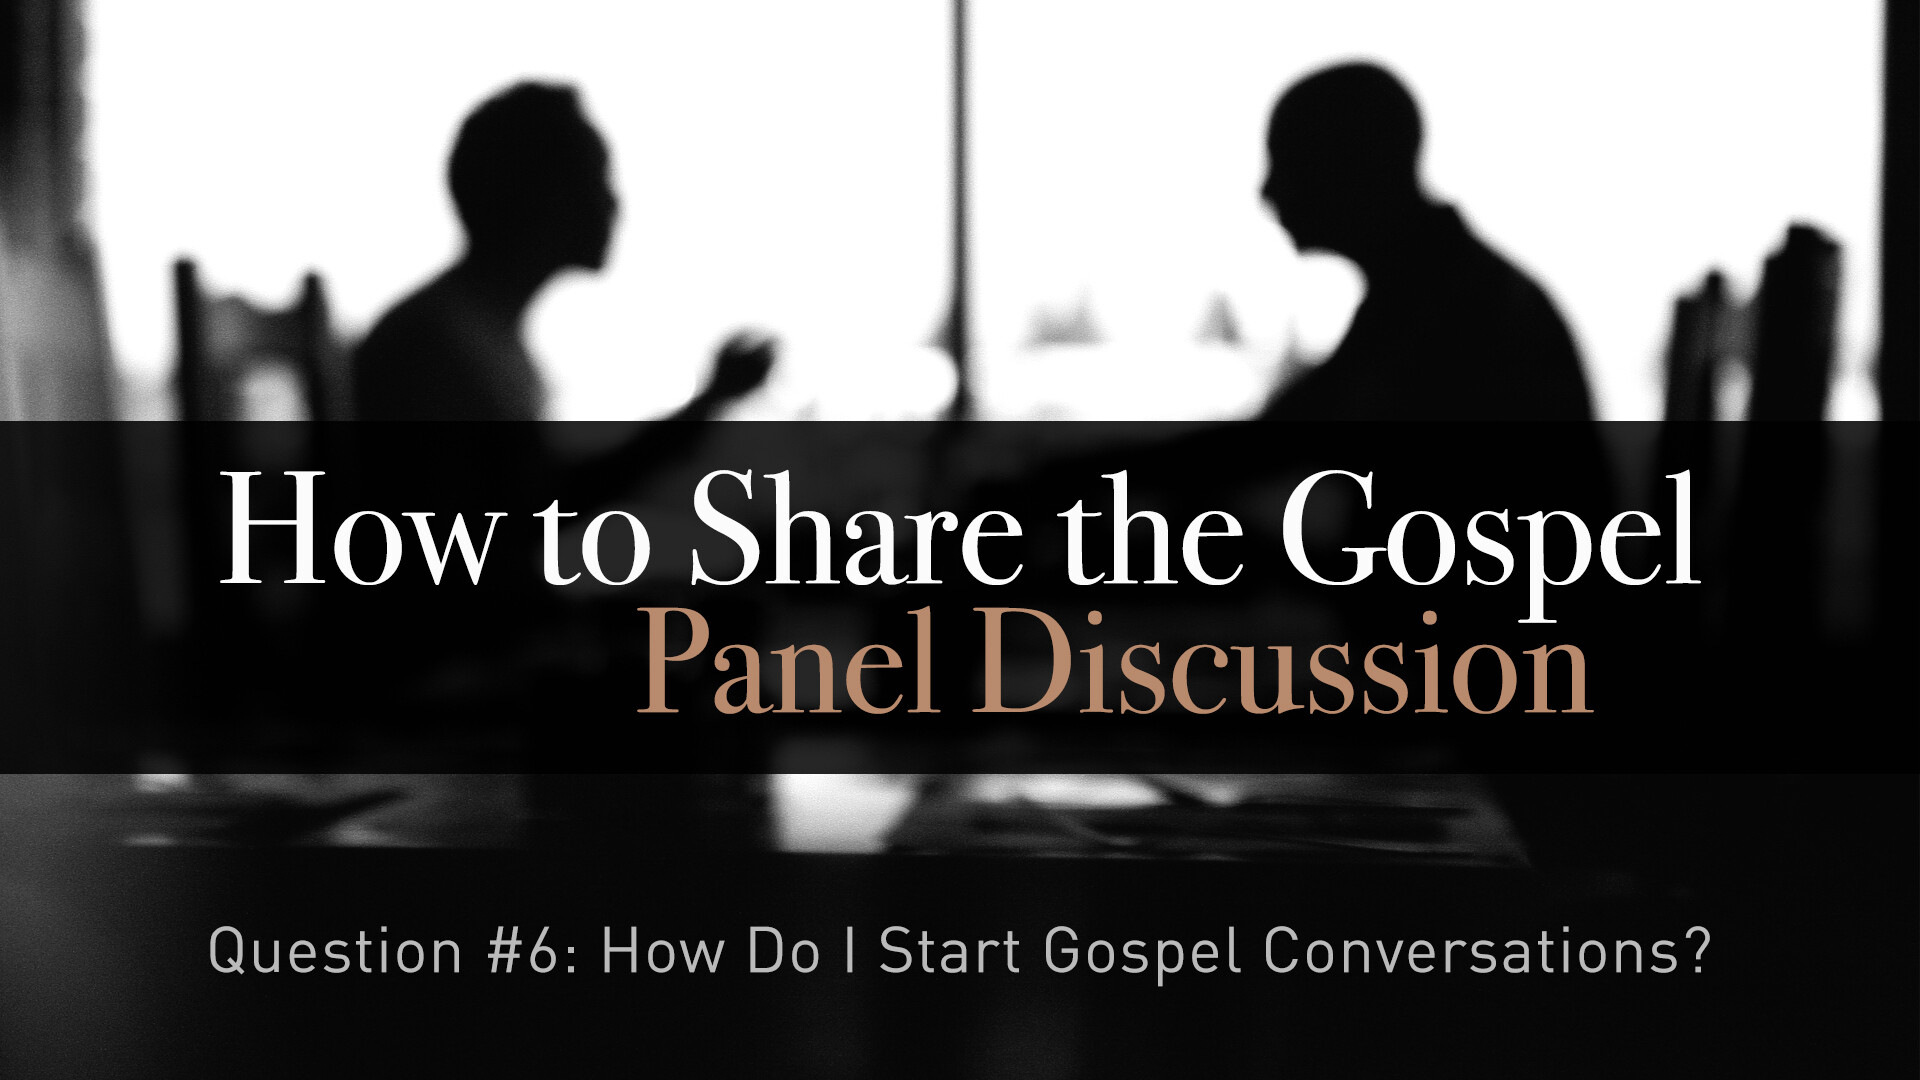 How Do I Start Gospel Conversations?